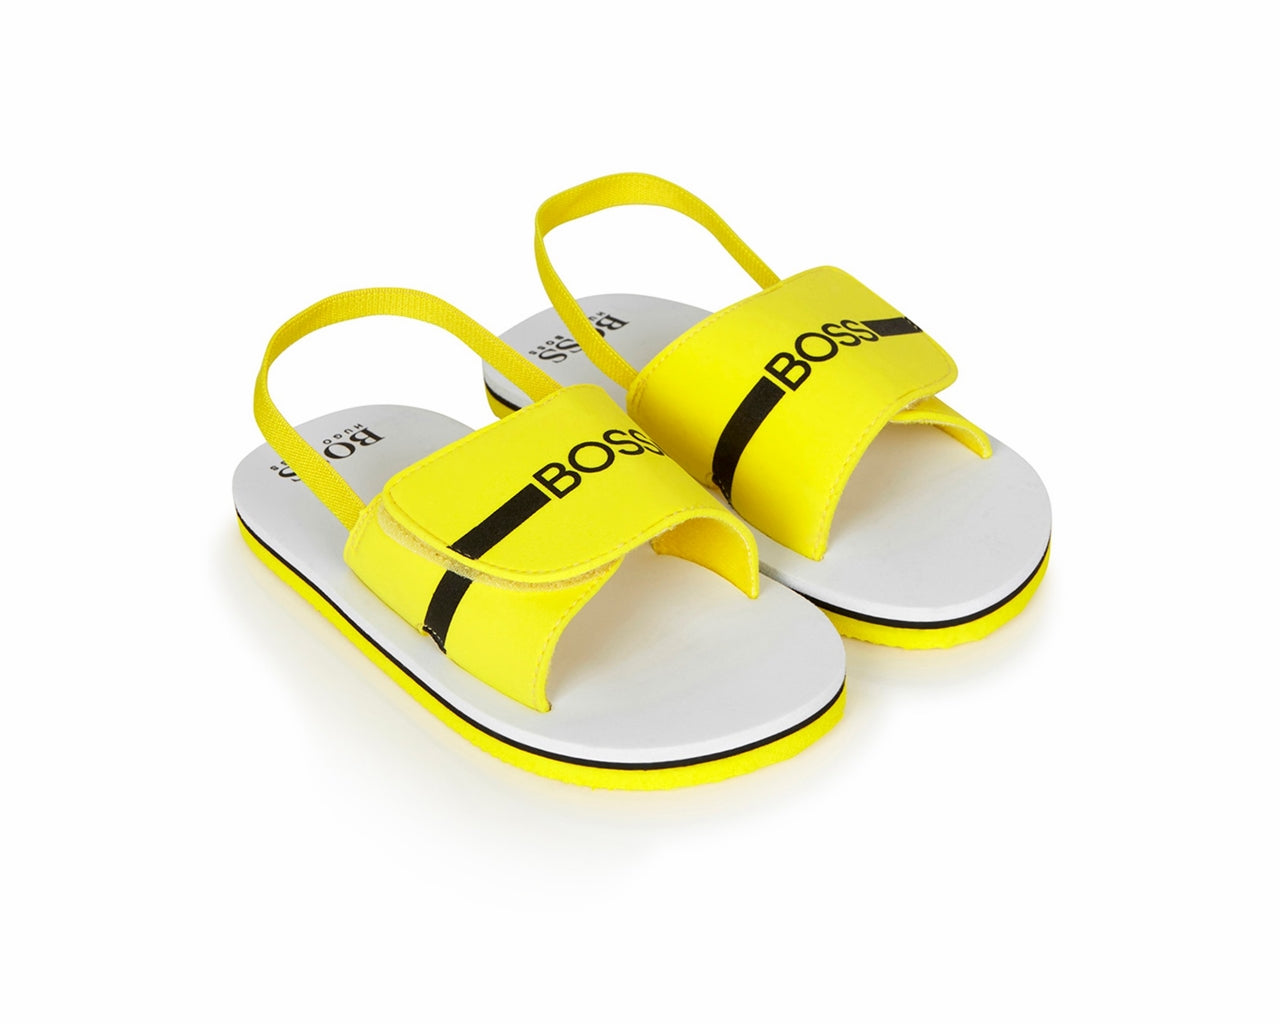 Umeki abort Rejse Hugo Boss J09143 553 Baby's Sandals Yellow Boys Summer Shoes | eBay